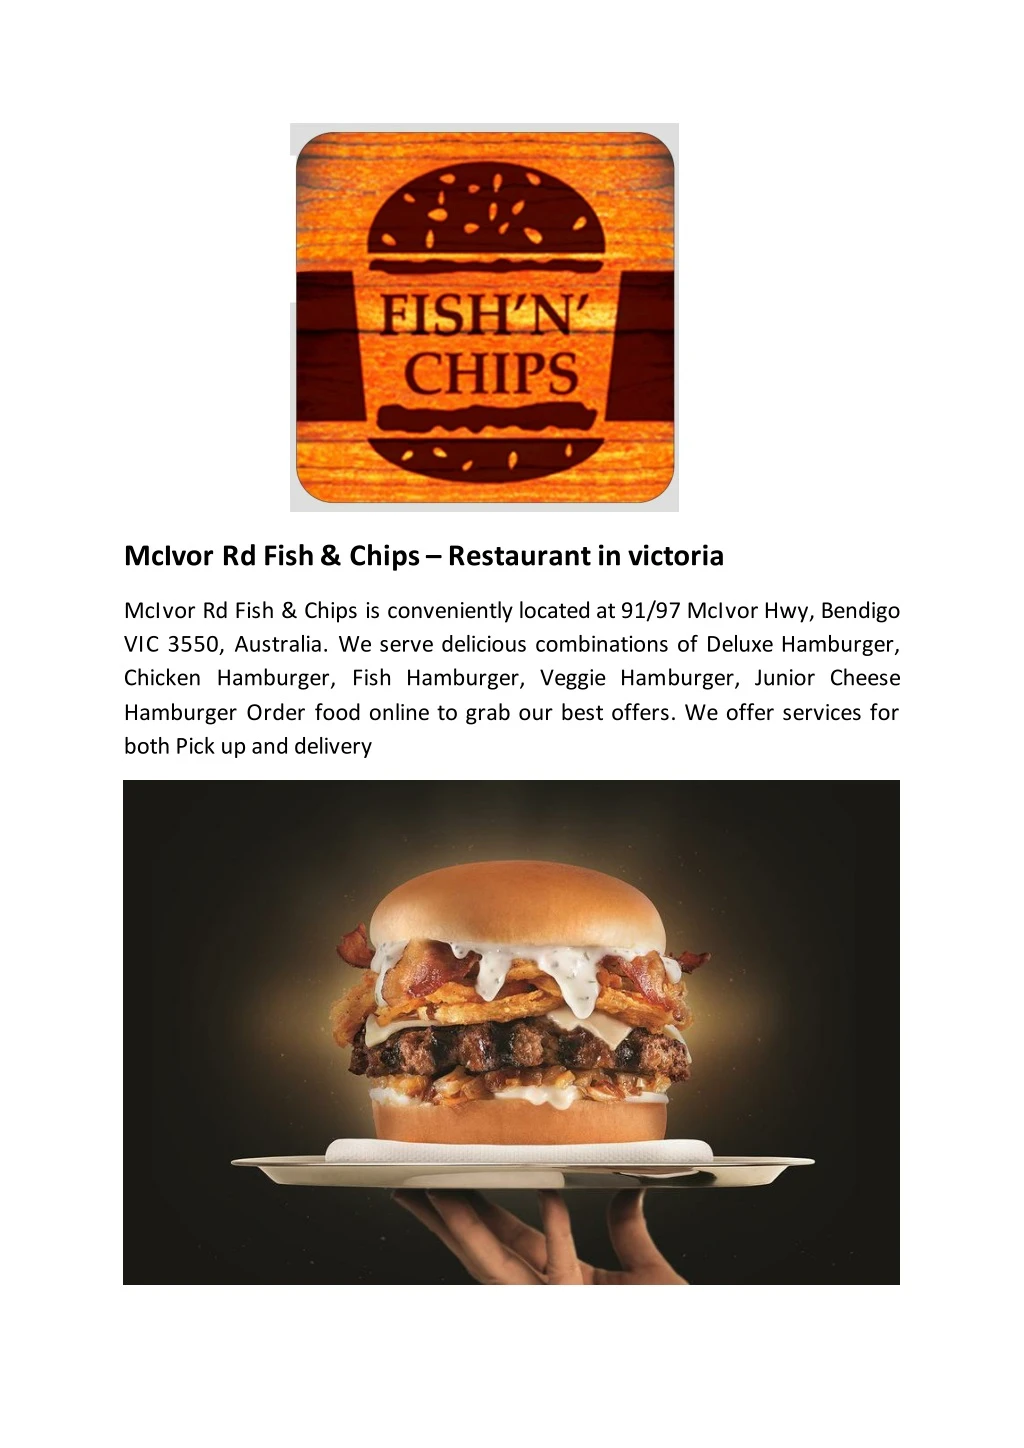 mcivor rd fish chips restaurant in victoria